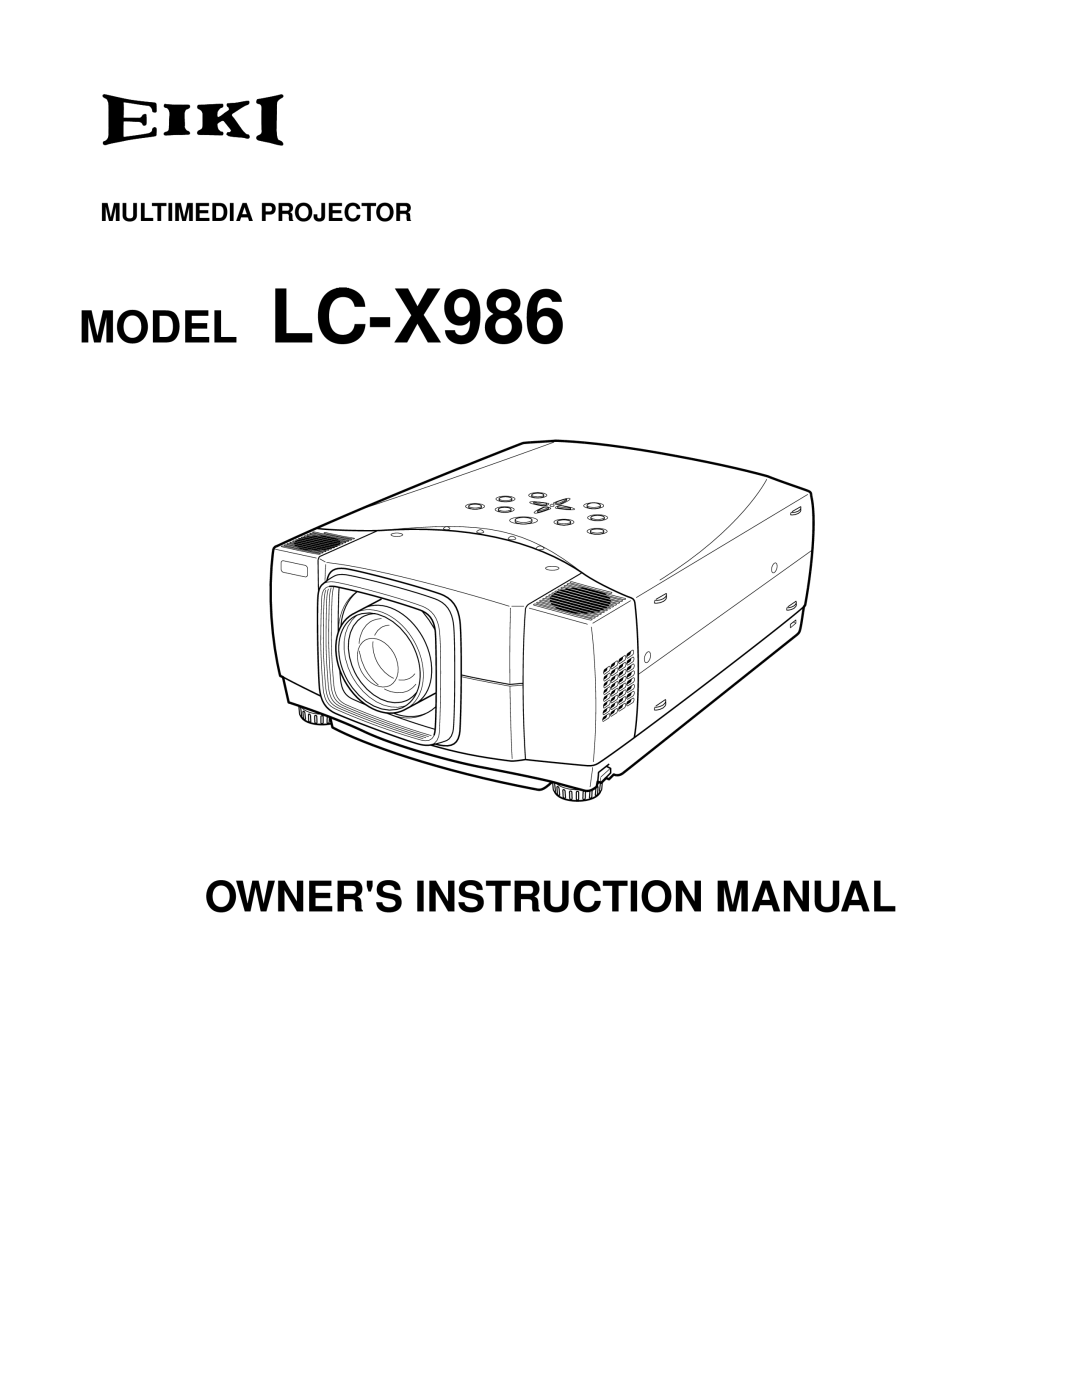 Eiki instruction manual MODEL LC-X986 